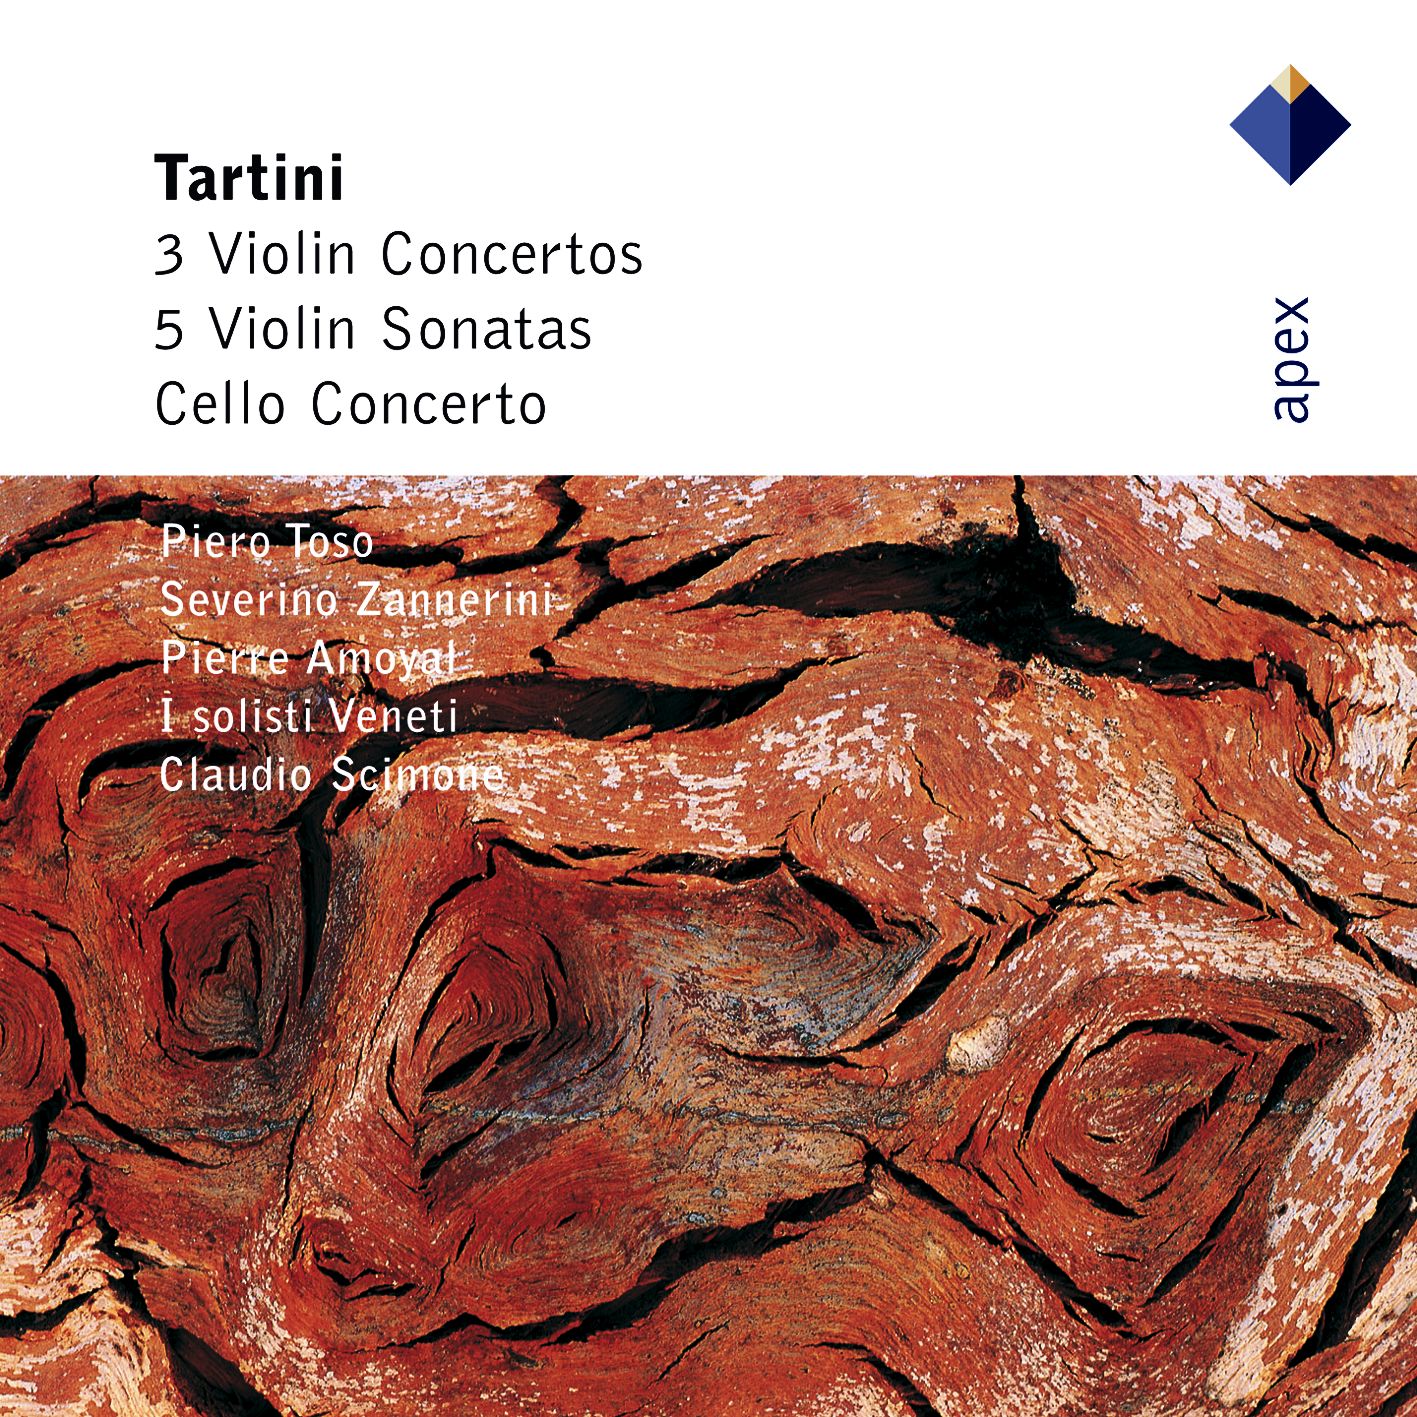 Tartini : Violin Sonata in C major Op.2 No.6 : I Largo - Andante